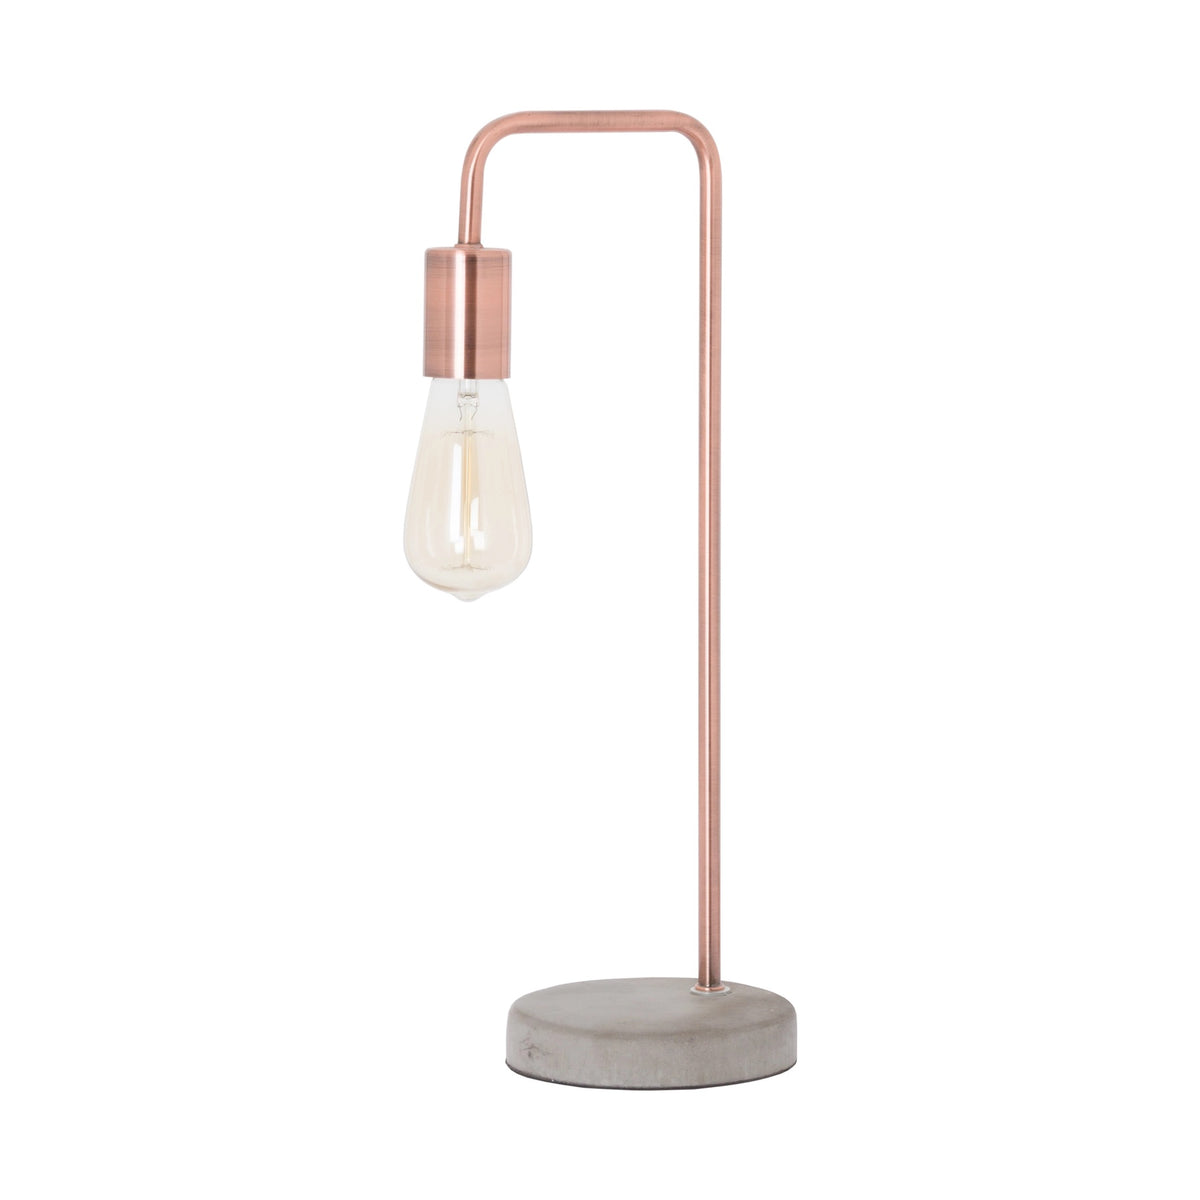 Industrial copper lamp stone base home decor home lighting rose gold lamp homeware uk